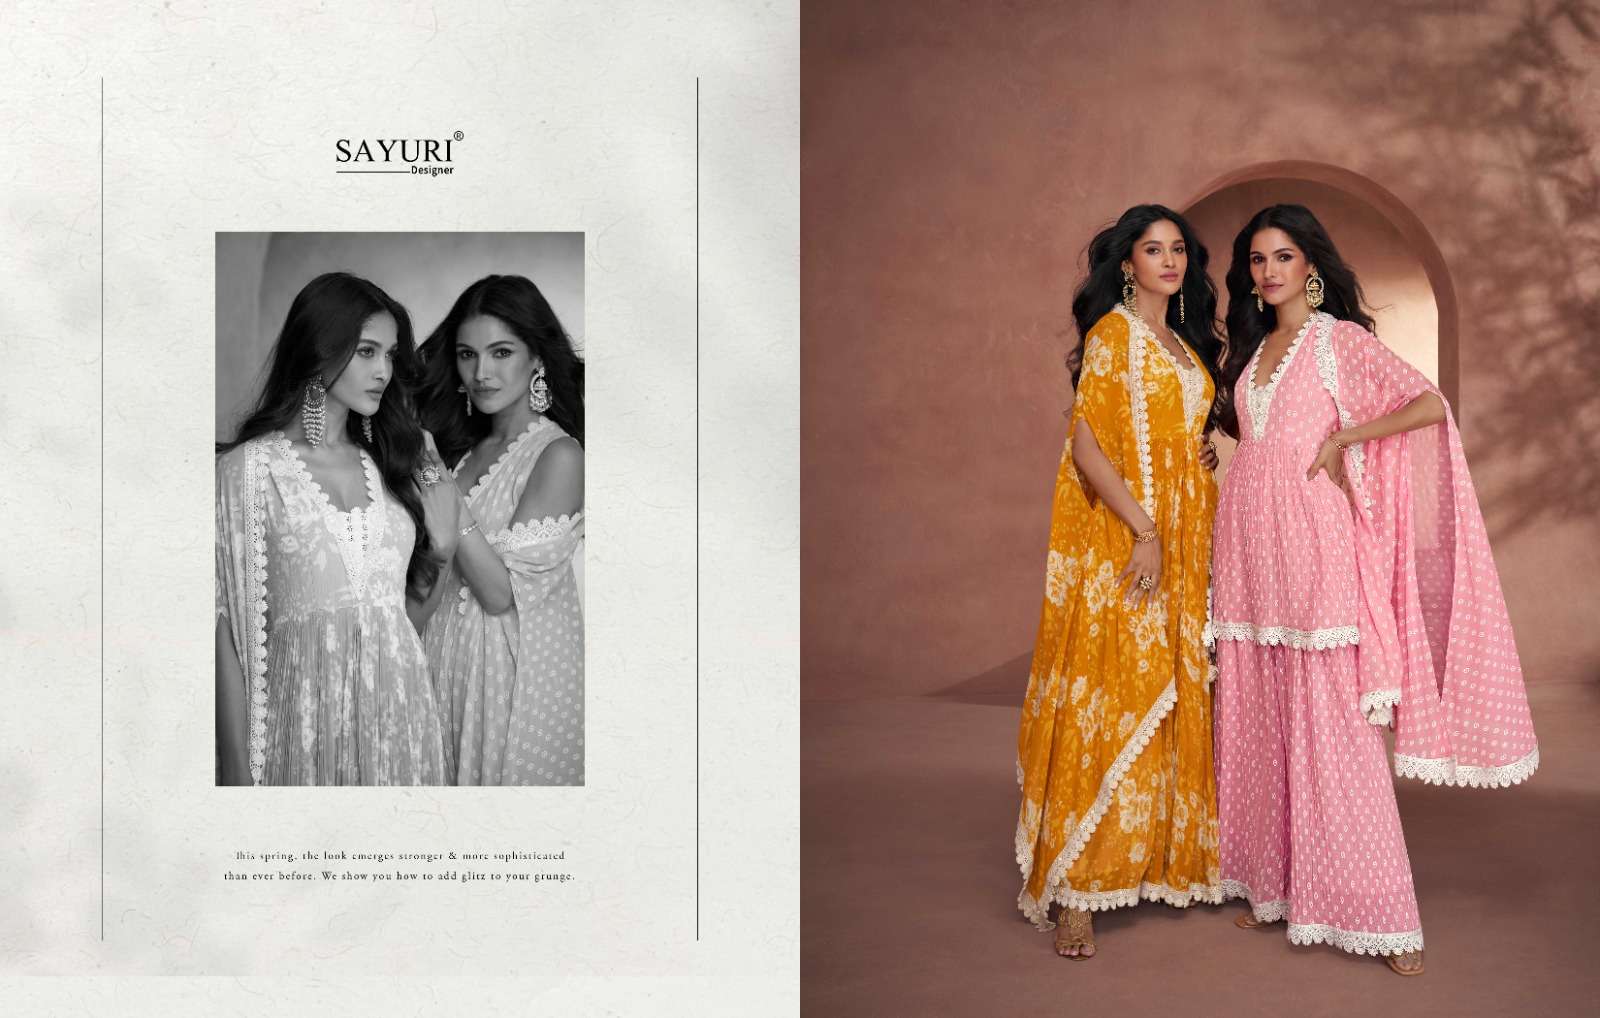 sayuri designer seerat 5289-5291 series real georgette designer dress catalogue surat